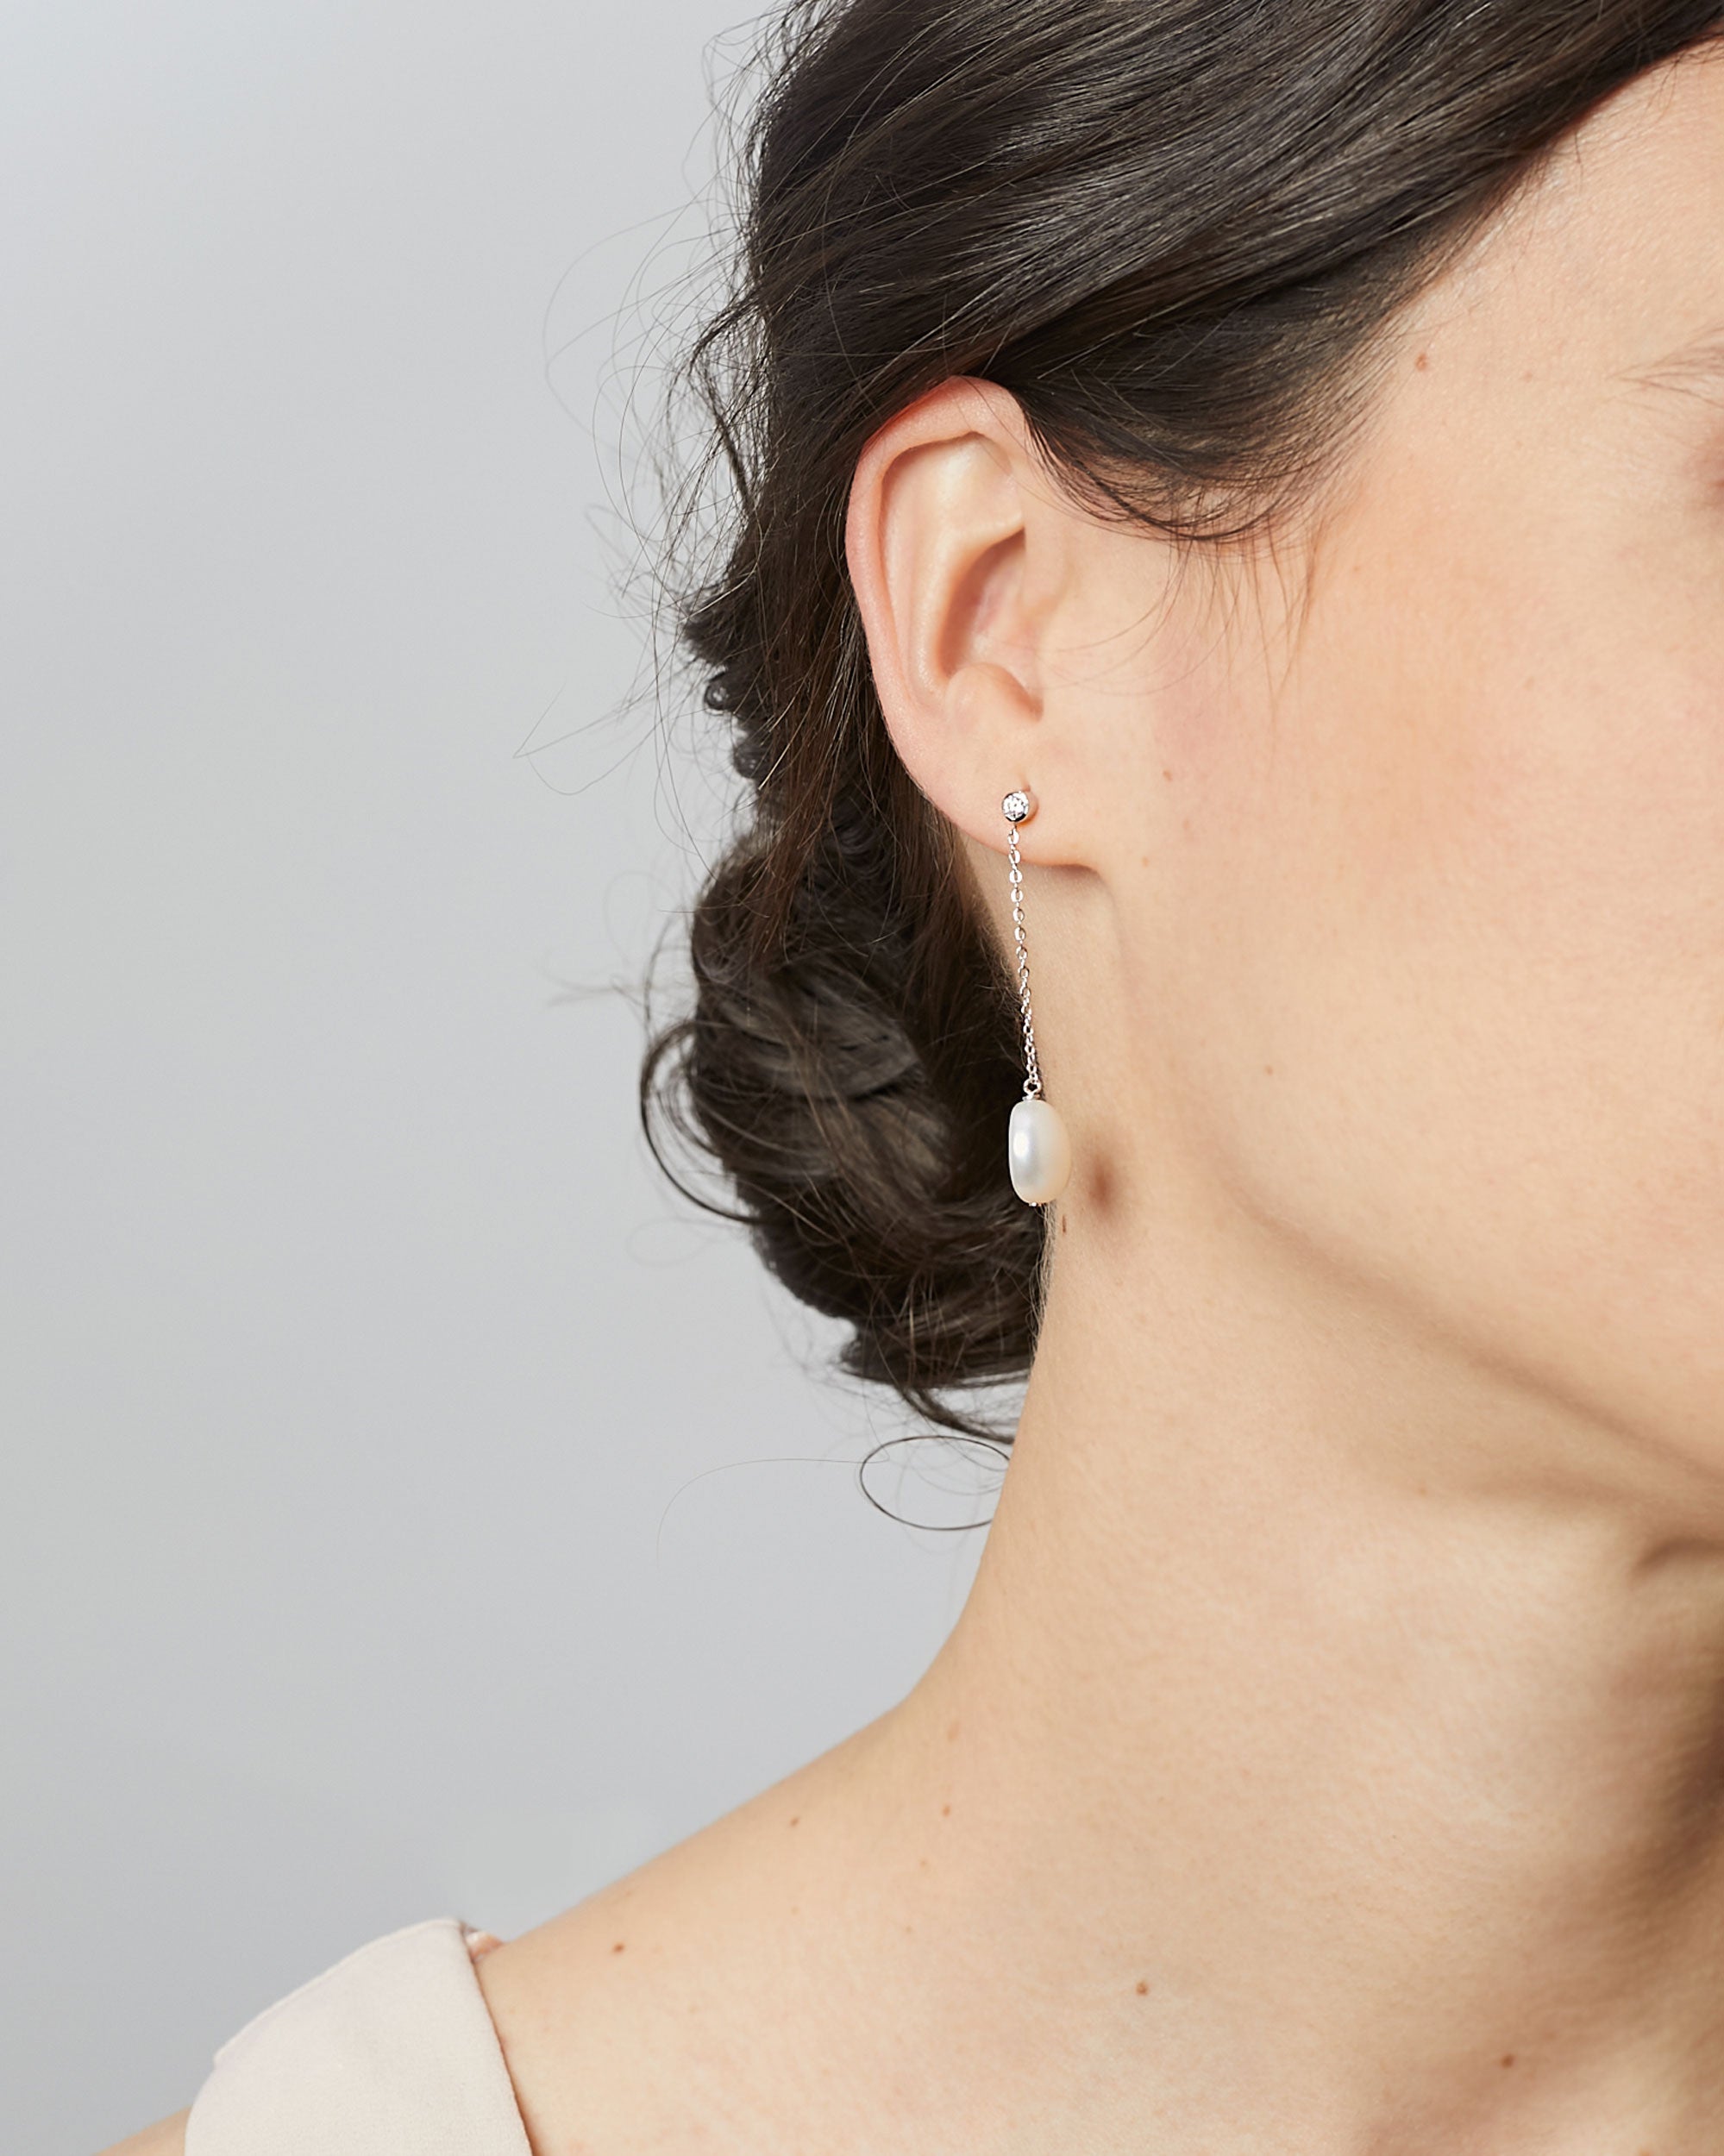 12mm White Freshwater Round Pearl Stud Earrings